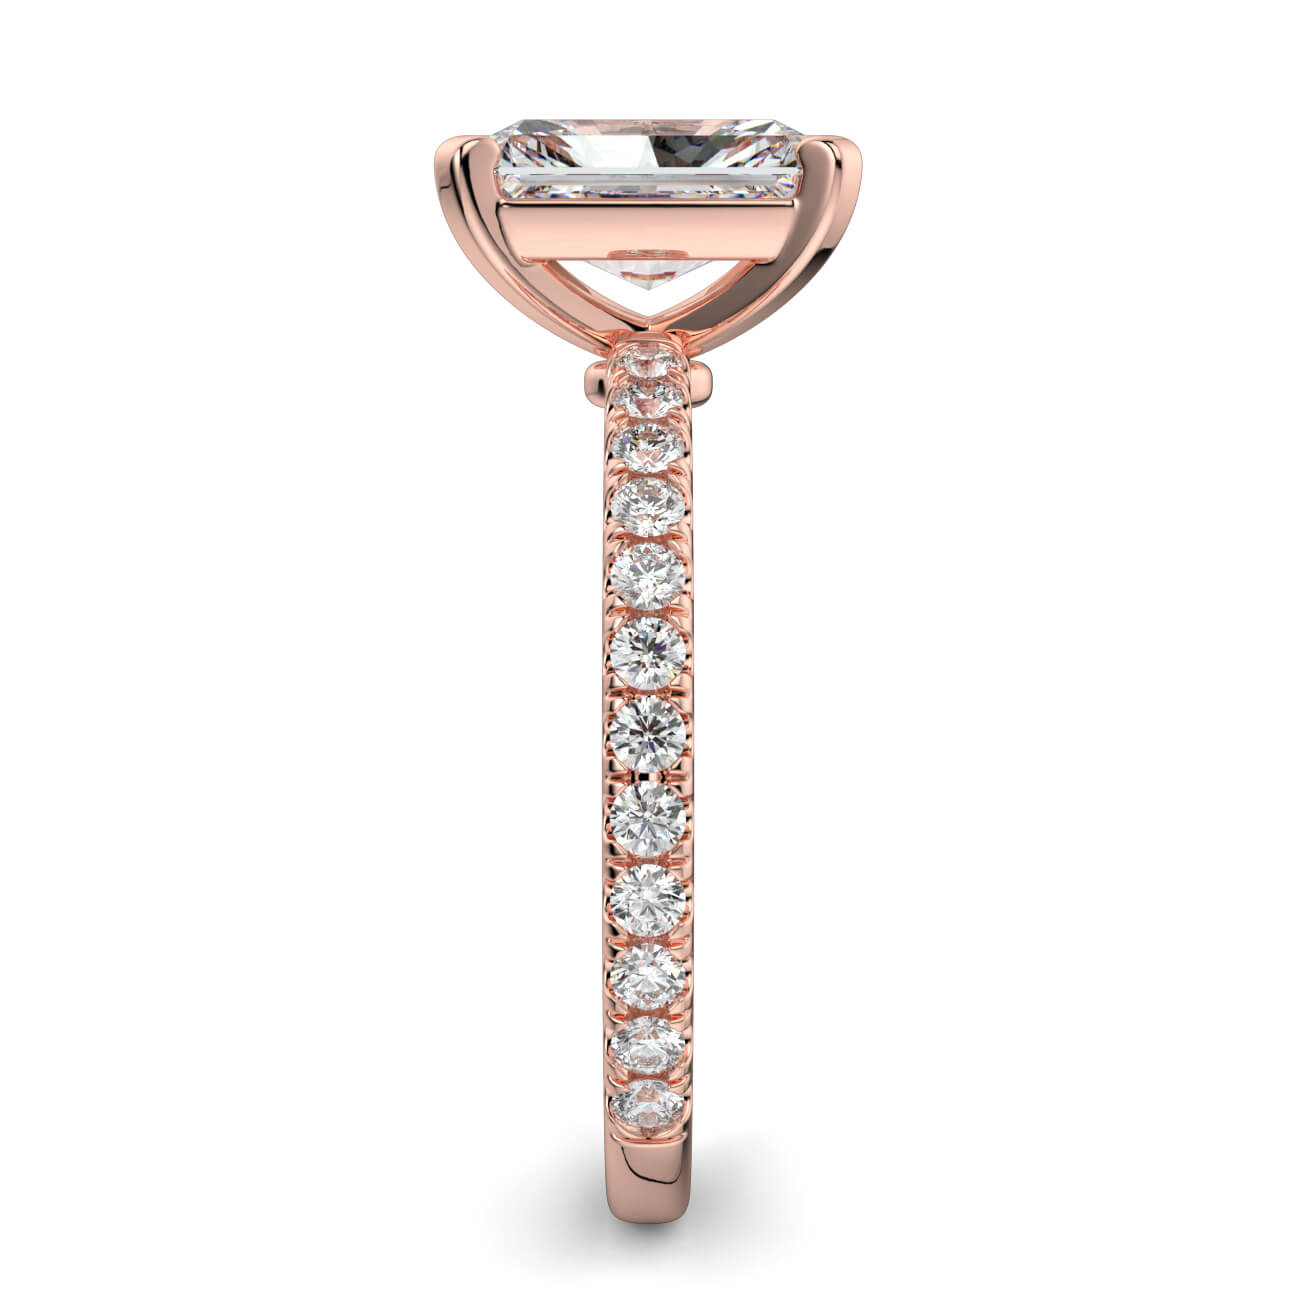 Delicate ‘Liat’ Radiant Cut Diamond Engagement Ring in 18k Rose Gold – Australian Diamond Network